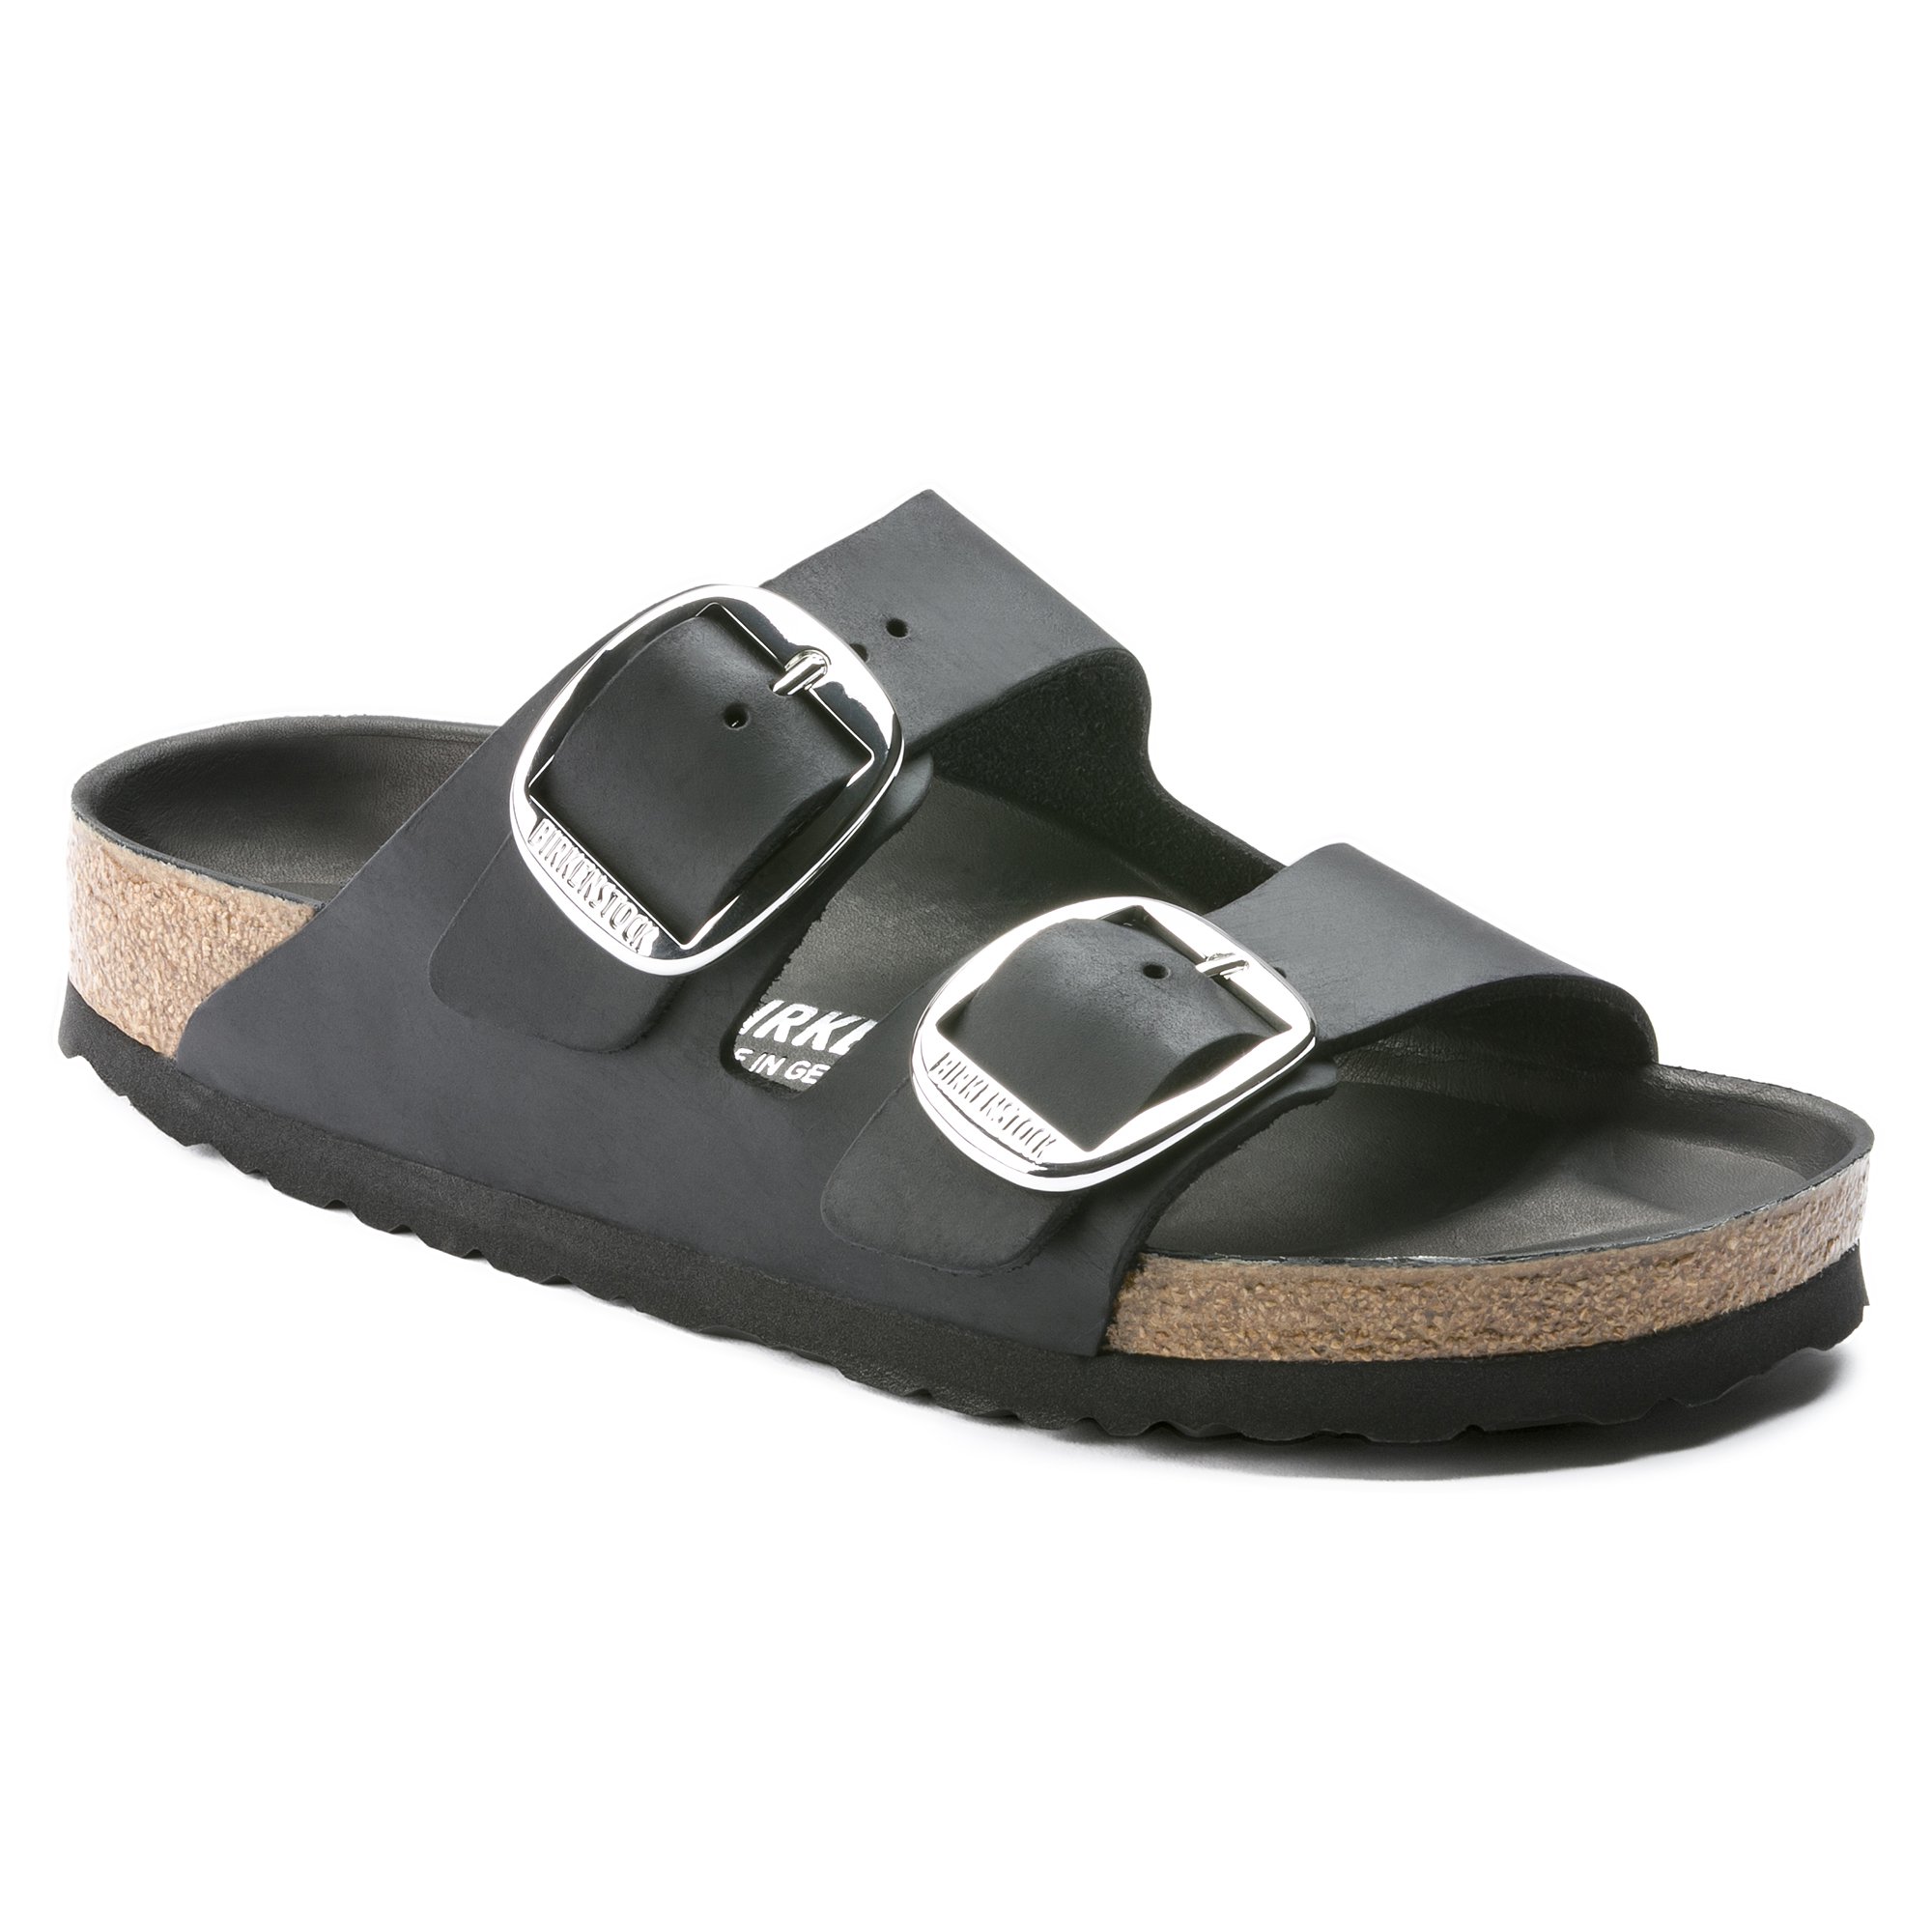 Birkenstock Arizona Big Buckle sandal, black, 36